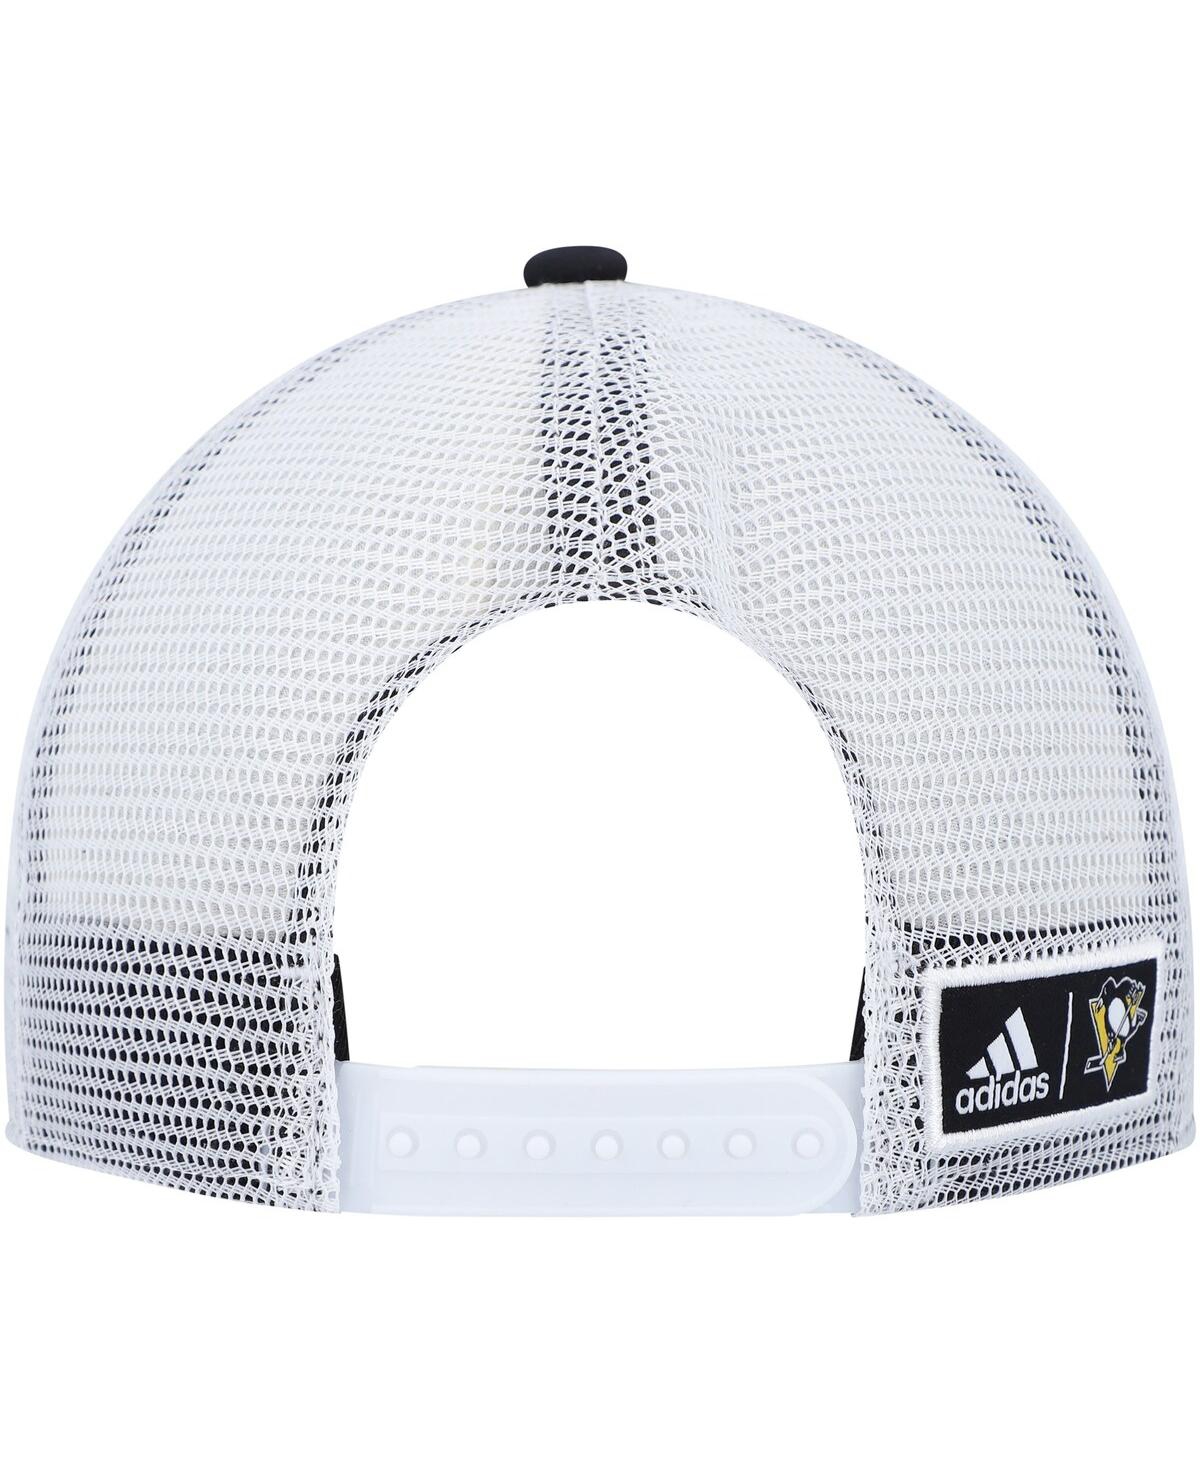 Minnesota Wild adidas Reverse Retro 2.0 Flex Fitted Hat - White